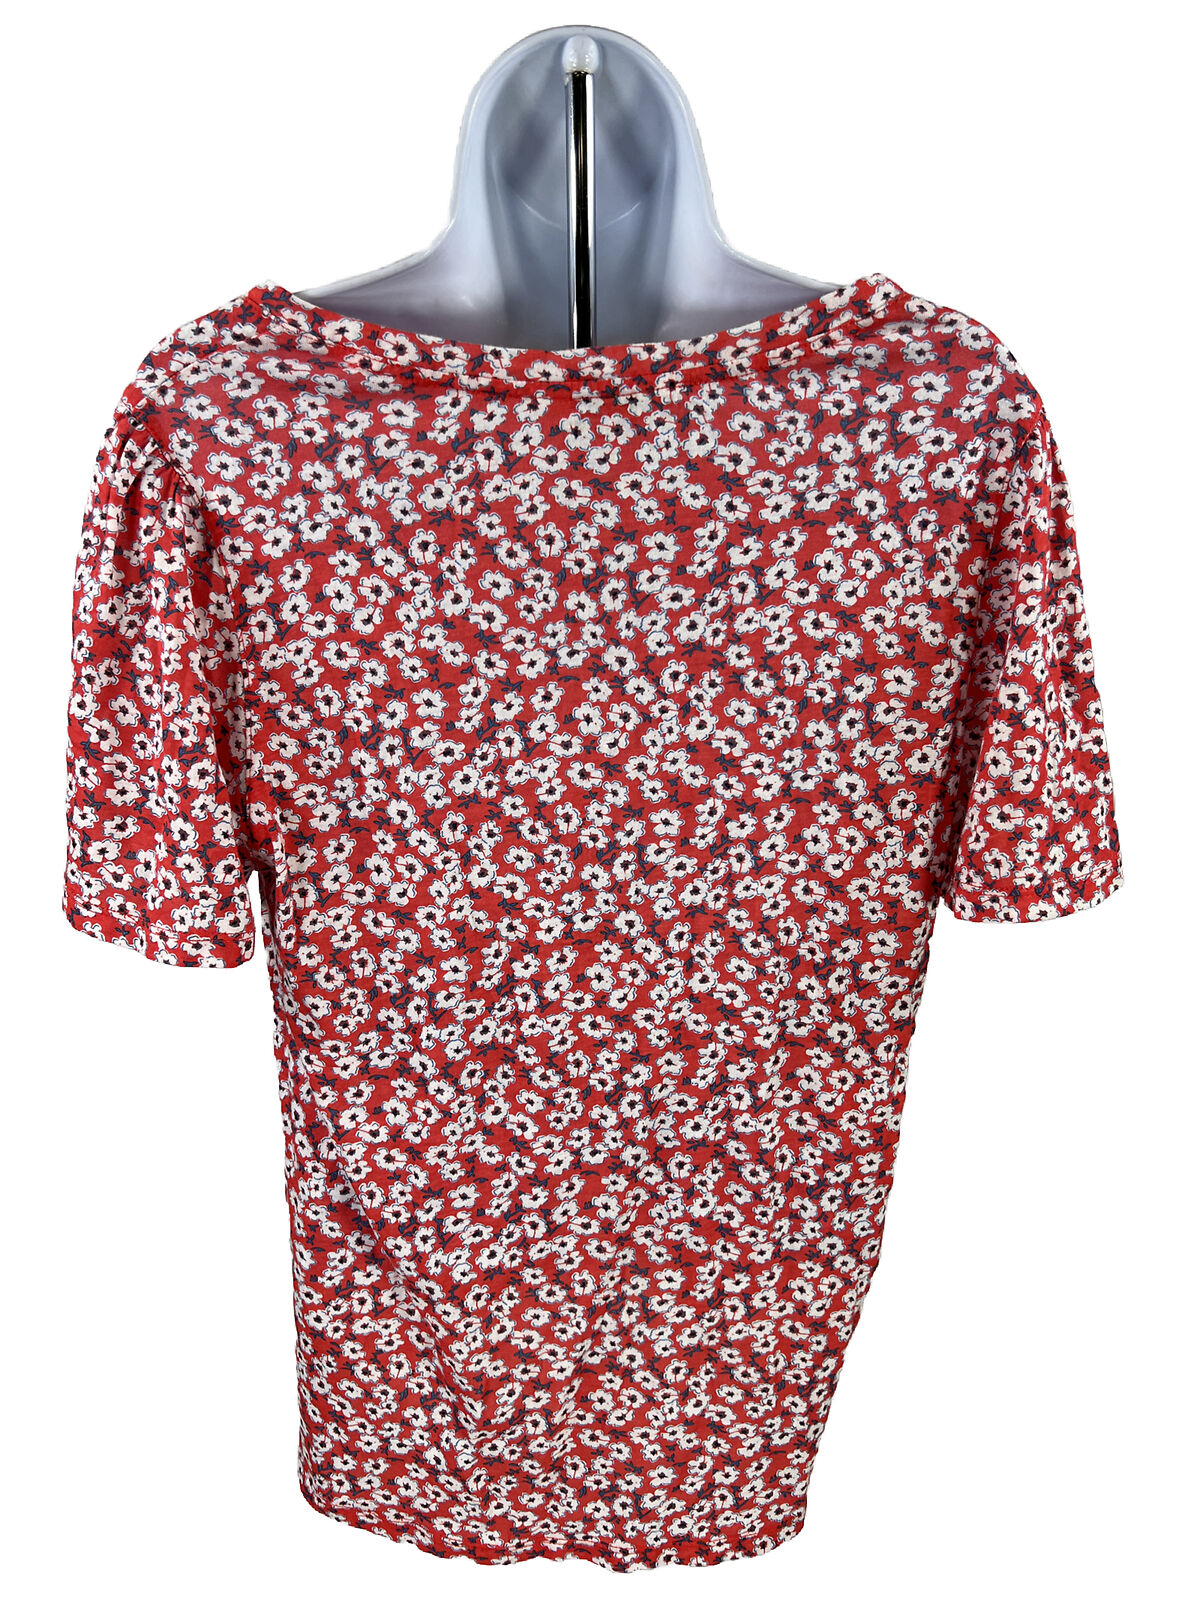 Lucky Brand Women's Red Floral Short Sleeve T-Shirt - M